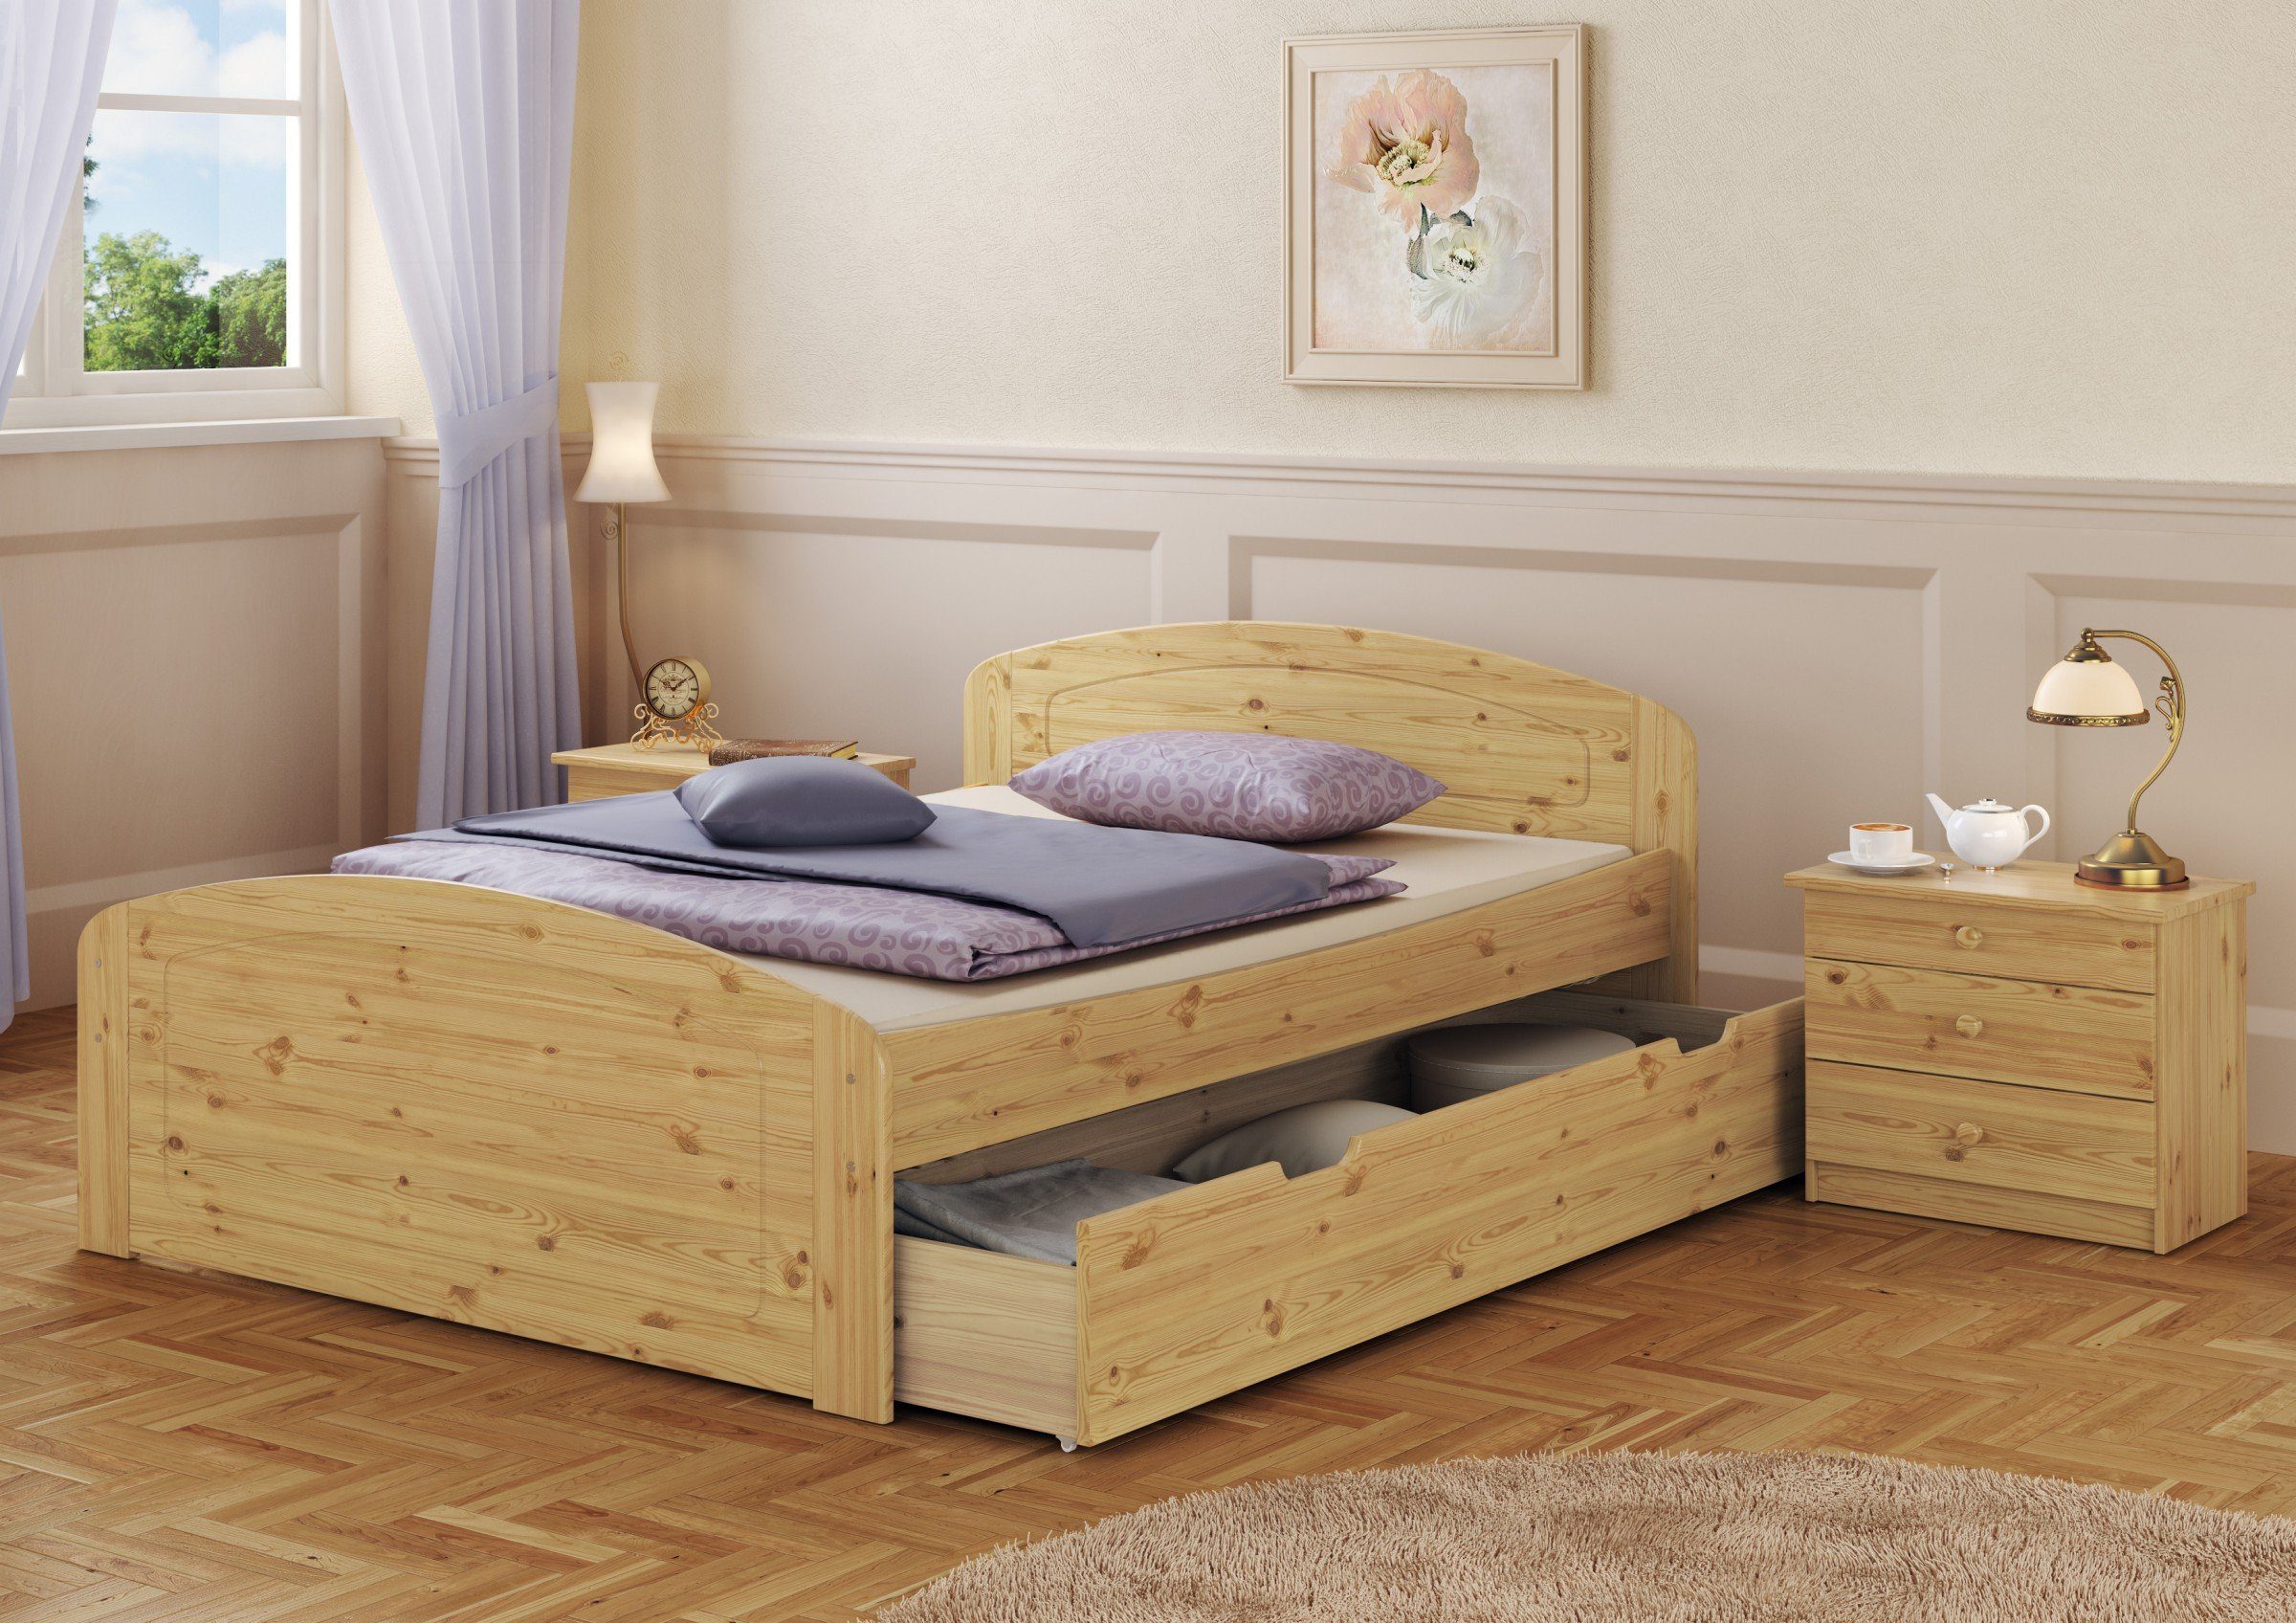 Federholzrahmen 3 Kieferfarblos lackiert Kiefer 160x200 + Doppelbett ERST-HOLZ Staukästen, + 2 Bett